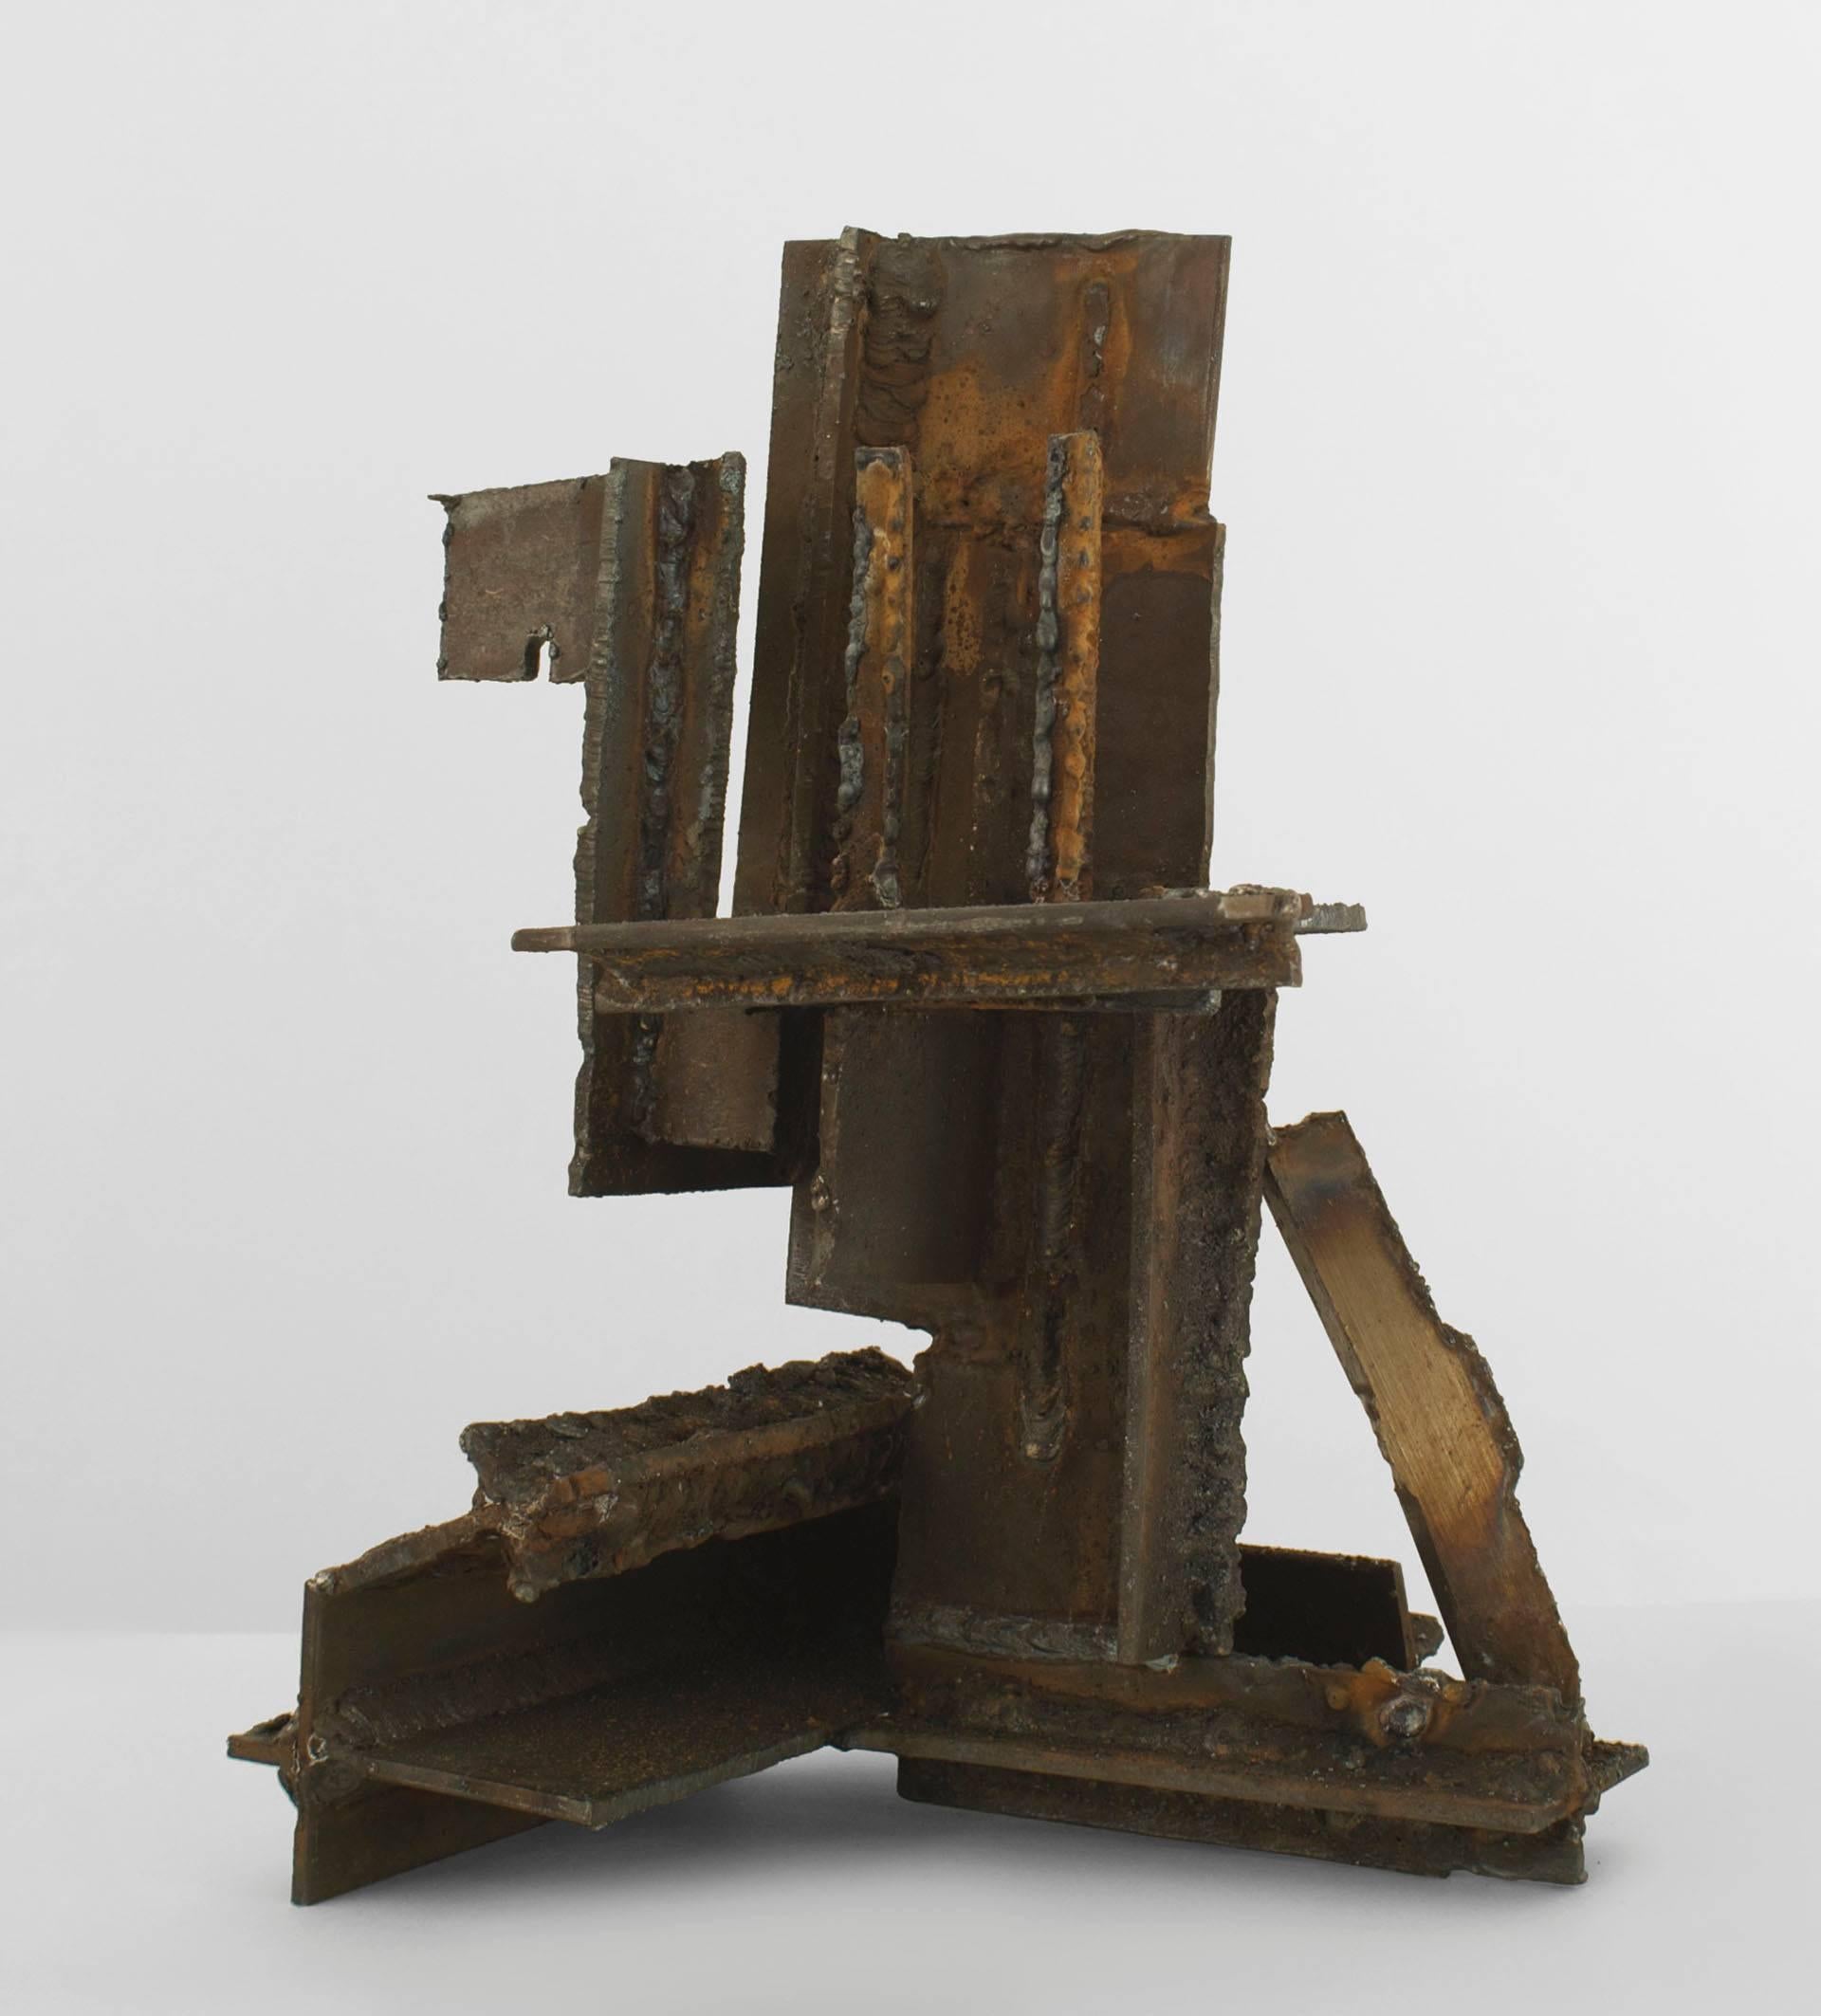 American Mid-Century Modern Brutalist sculpture of tortured and burnt welded steel.
